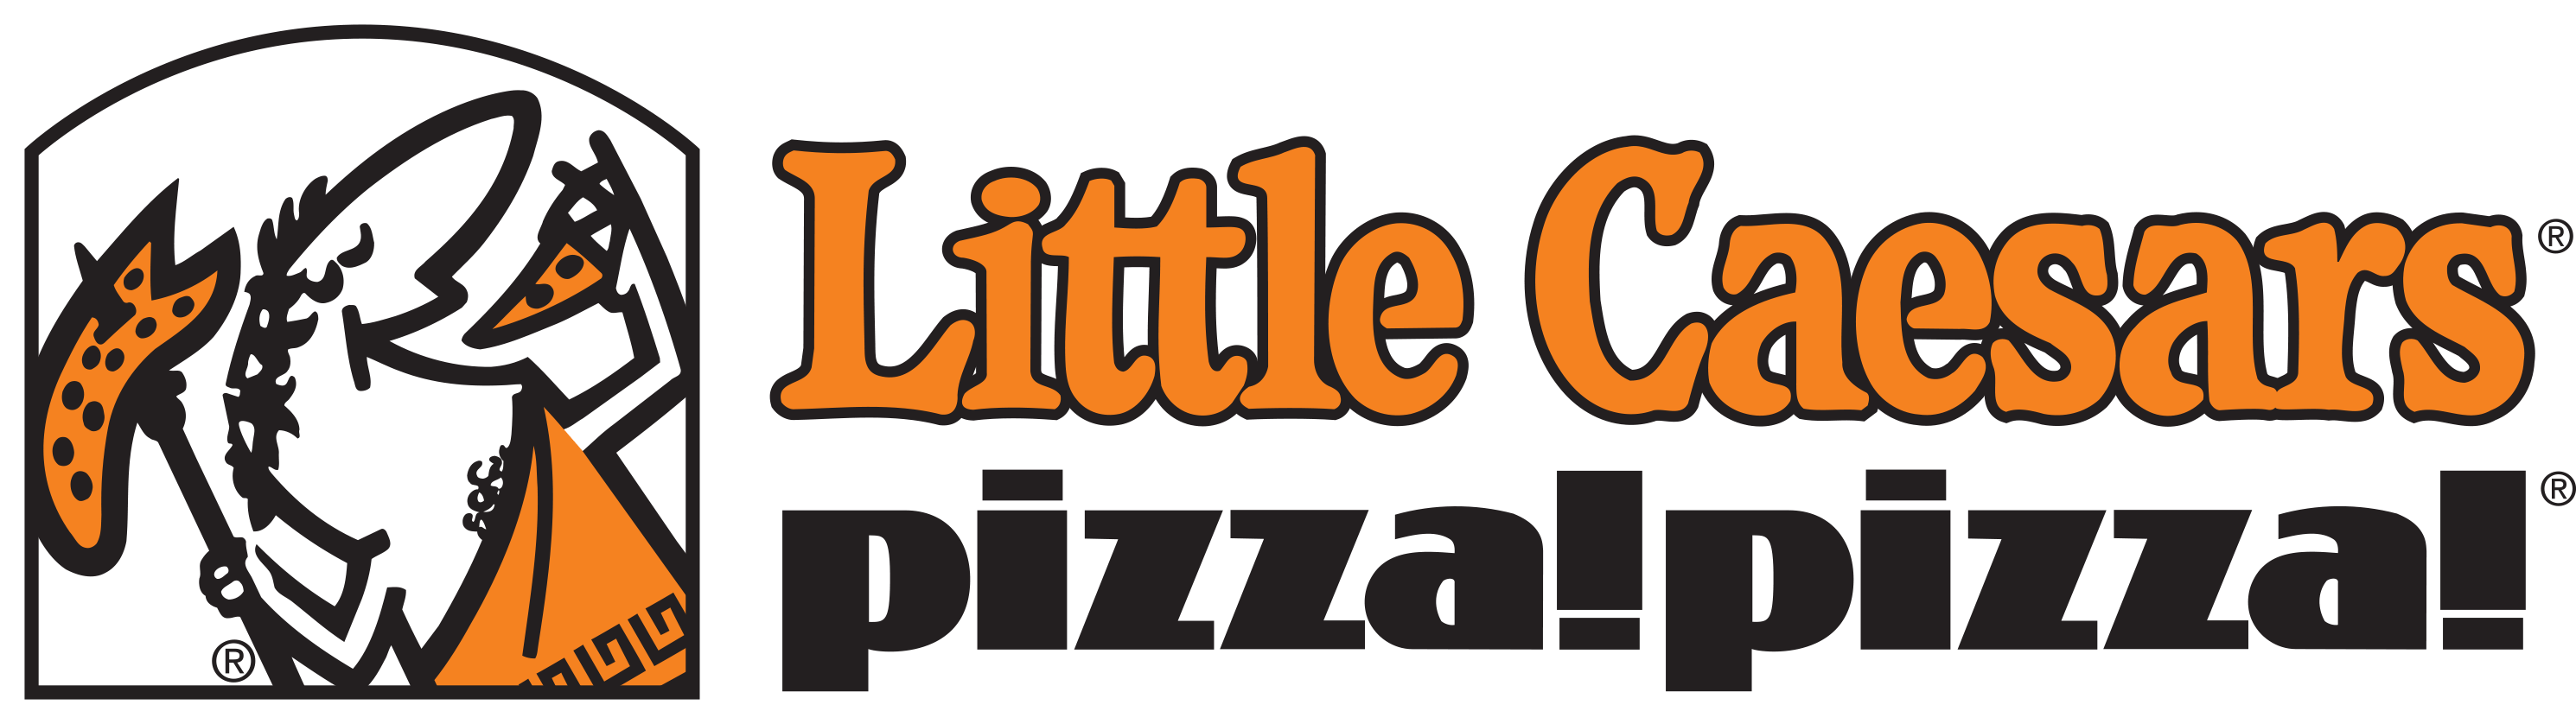 Food Little Caesars Logo - Food Services Manager Little Caesars | CalgaryJobBoard.ca